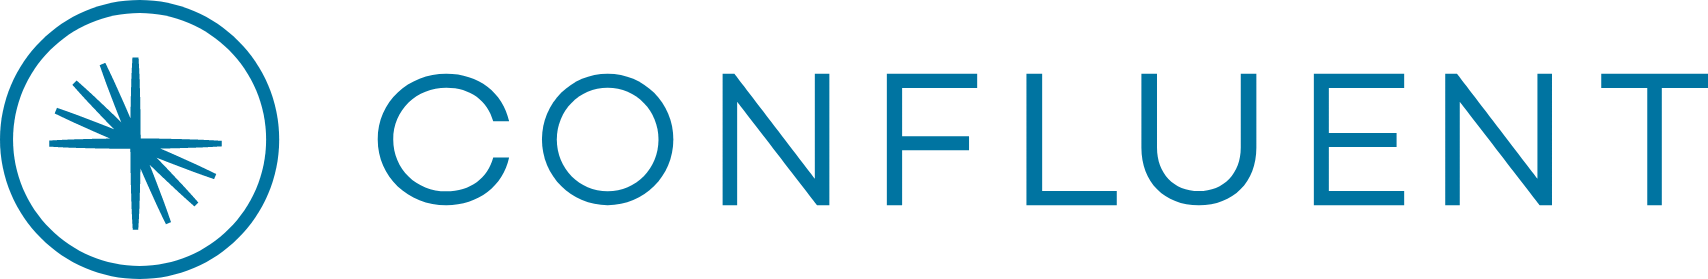 Confluent logo large (transparent PNG)